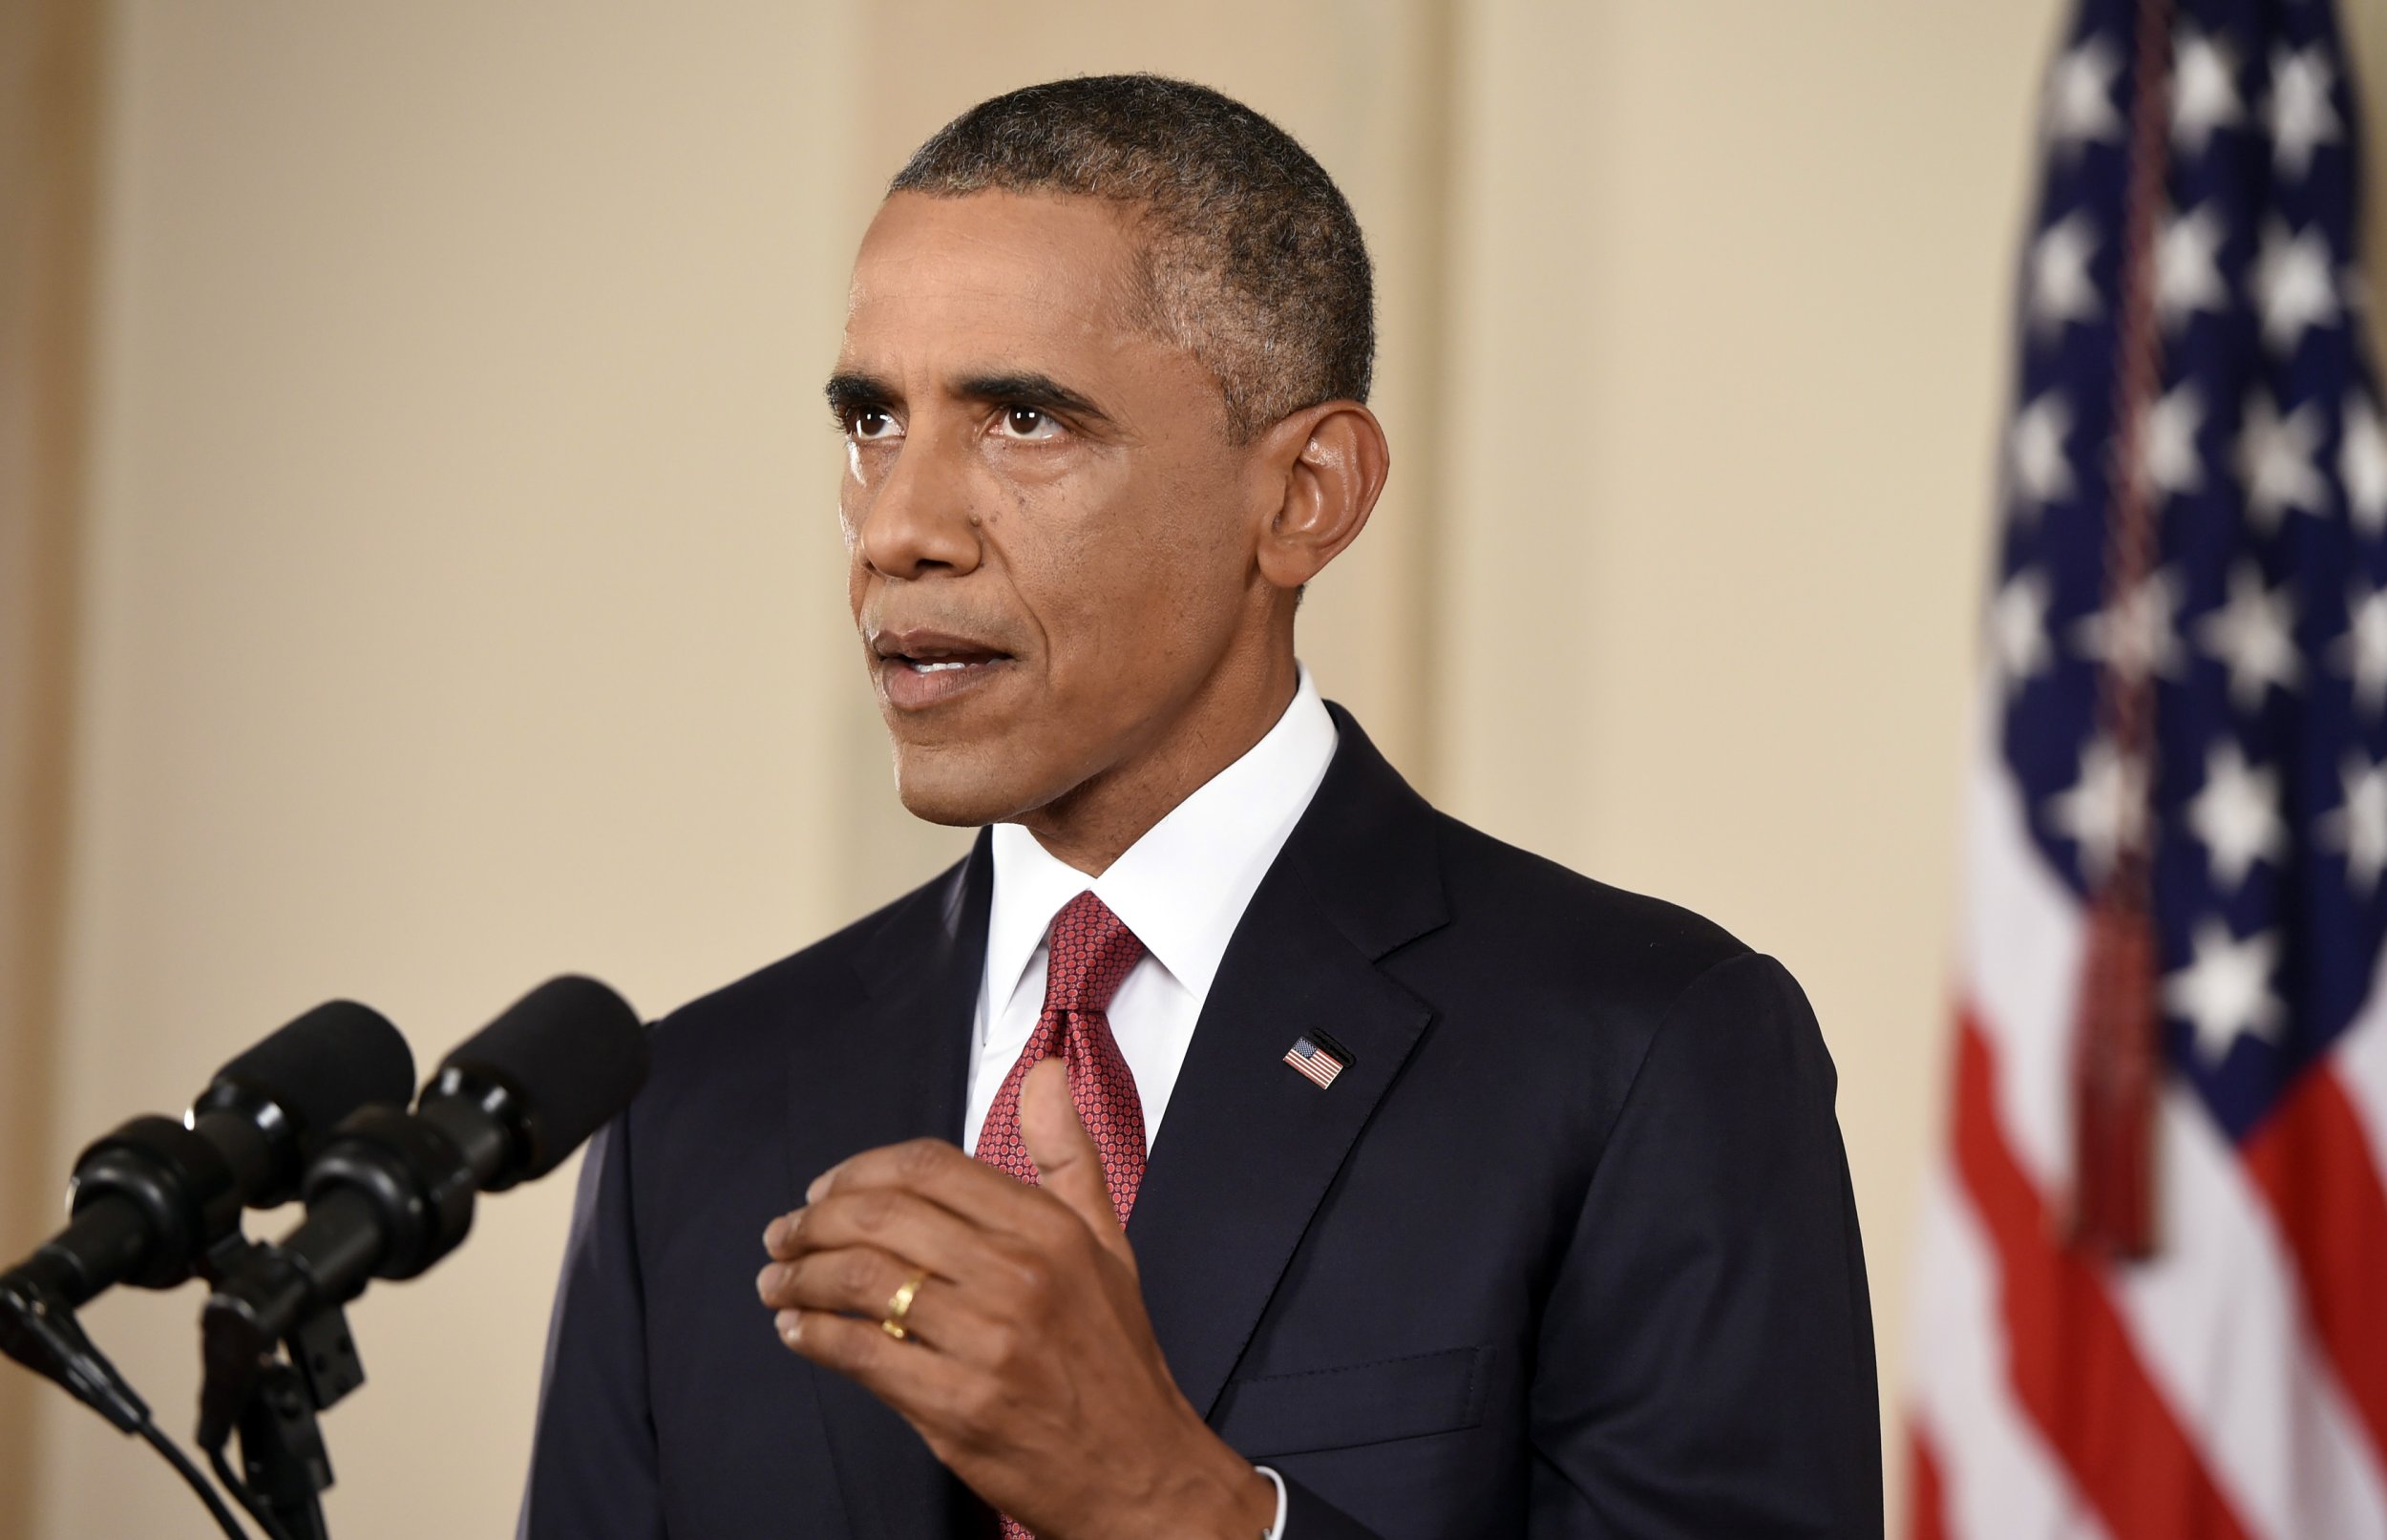 President Obama Isis Speech Full Text 